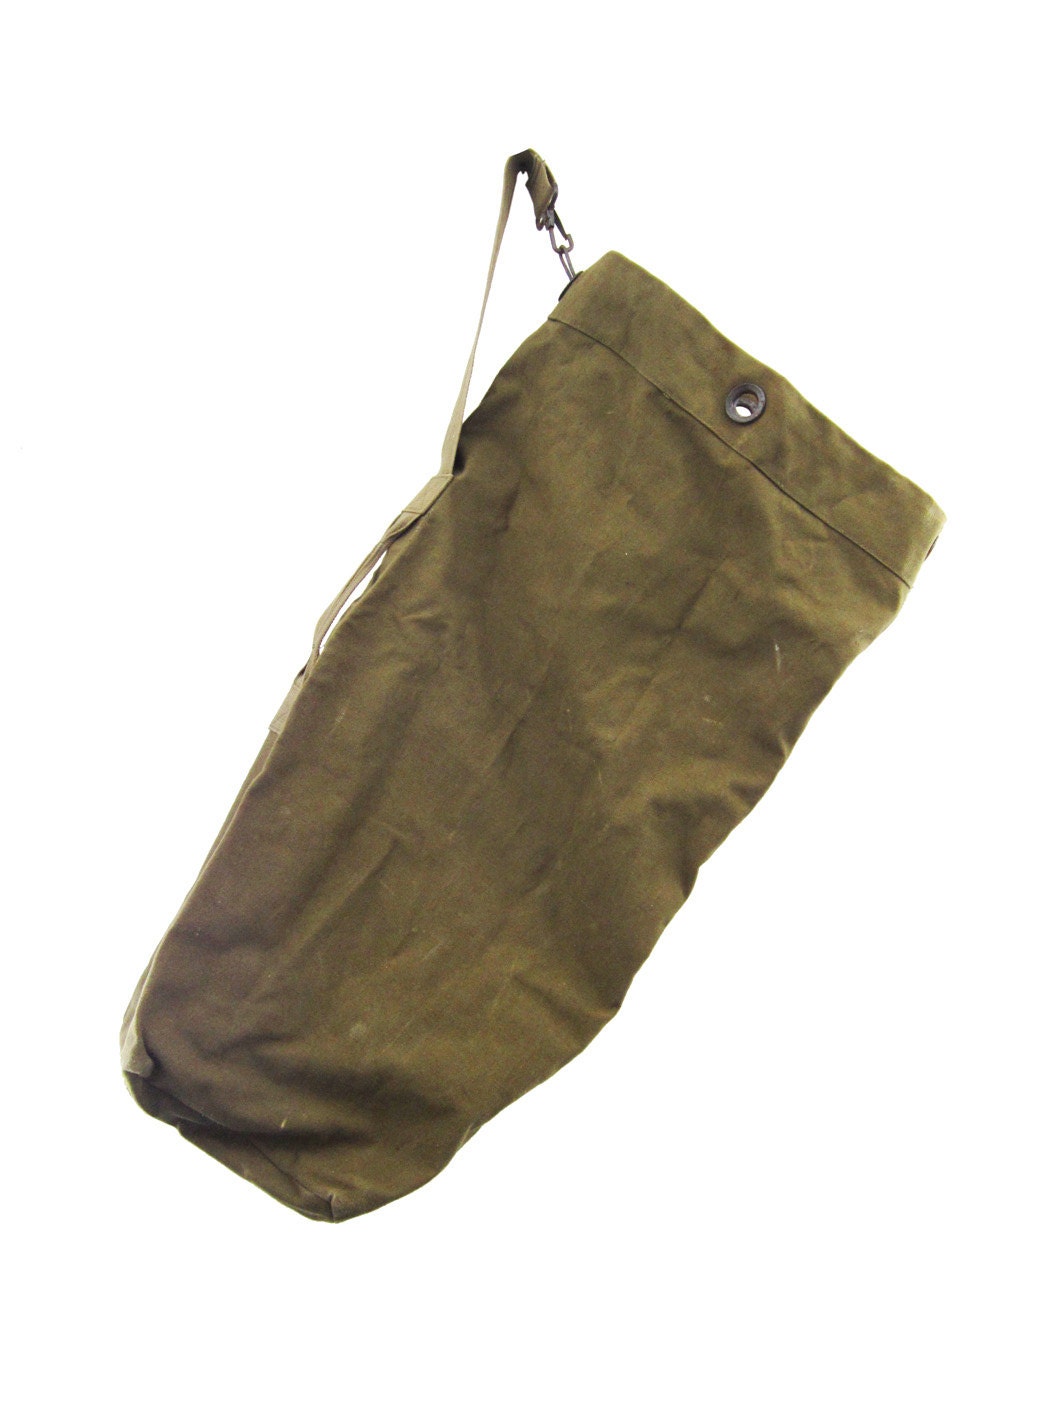 Vintage 70s Army Duffel Bag Canvas Olive Drab Deployment Bag